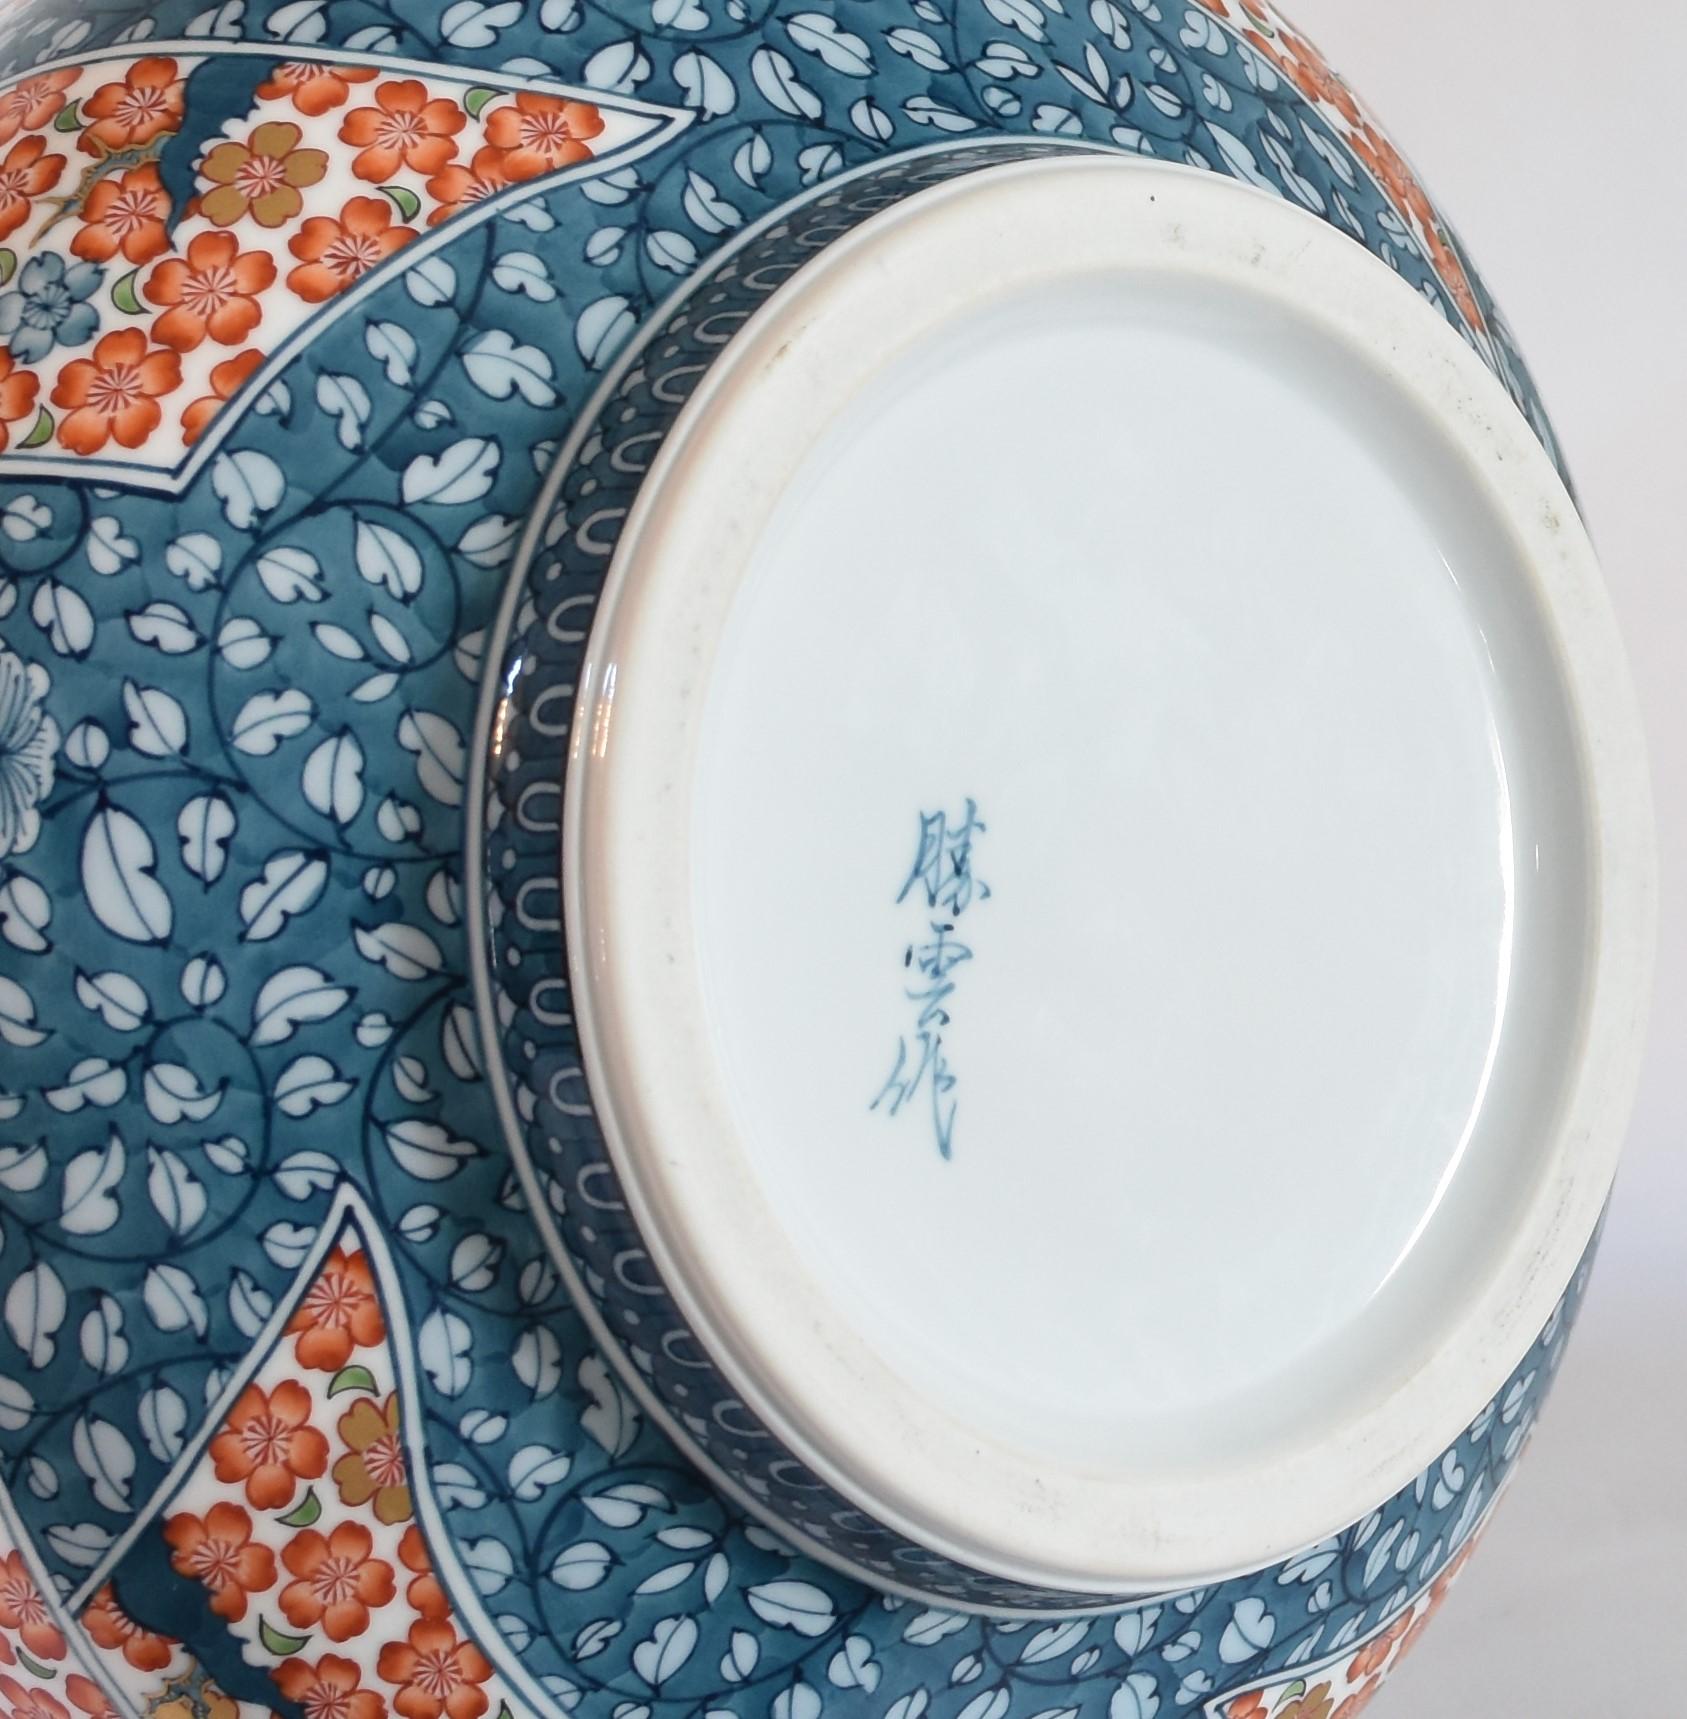 Gilt Japanese Porcelain Vase in Red Blue by Contemporary Master Artist